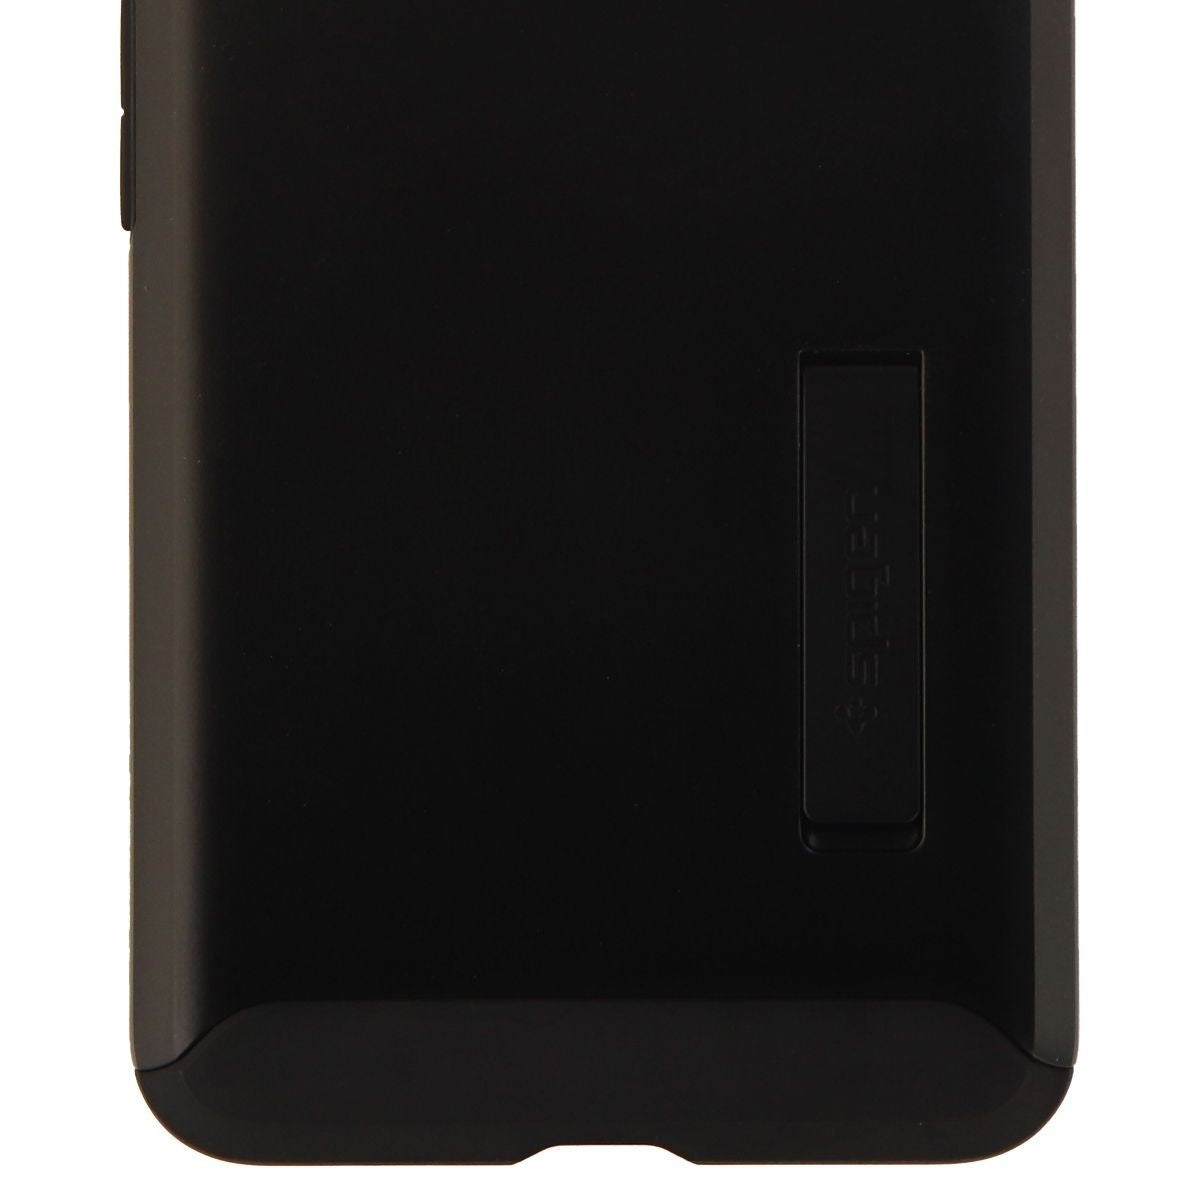 Spigen Slim Armor Series Dual Layer Case for Google Pixel 2 XL - Black Cases, Covers & Skins Spigen    - Simple Cell Bulk Wholesale Pricing - USA Seller